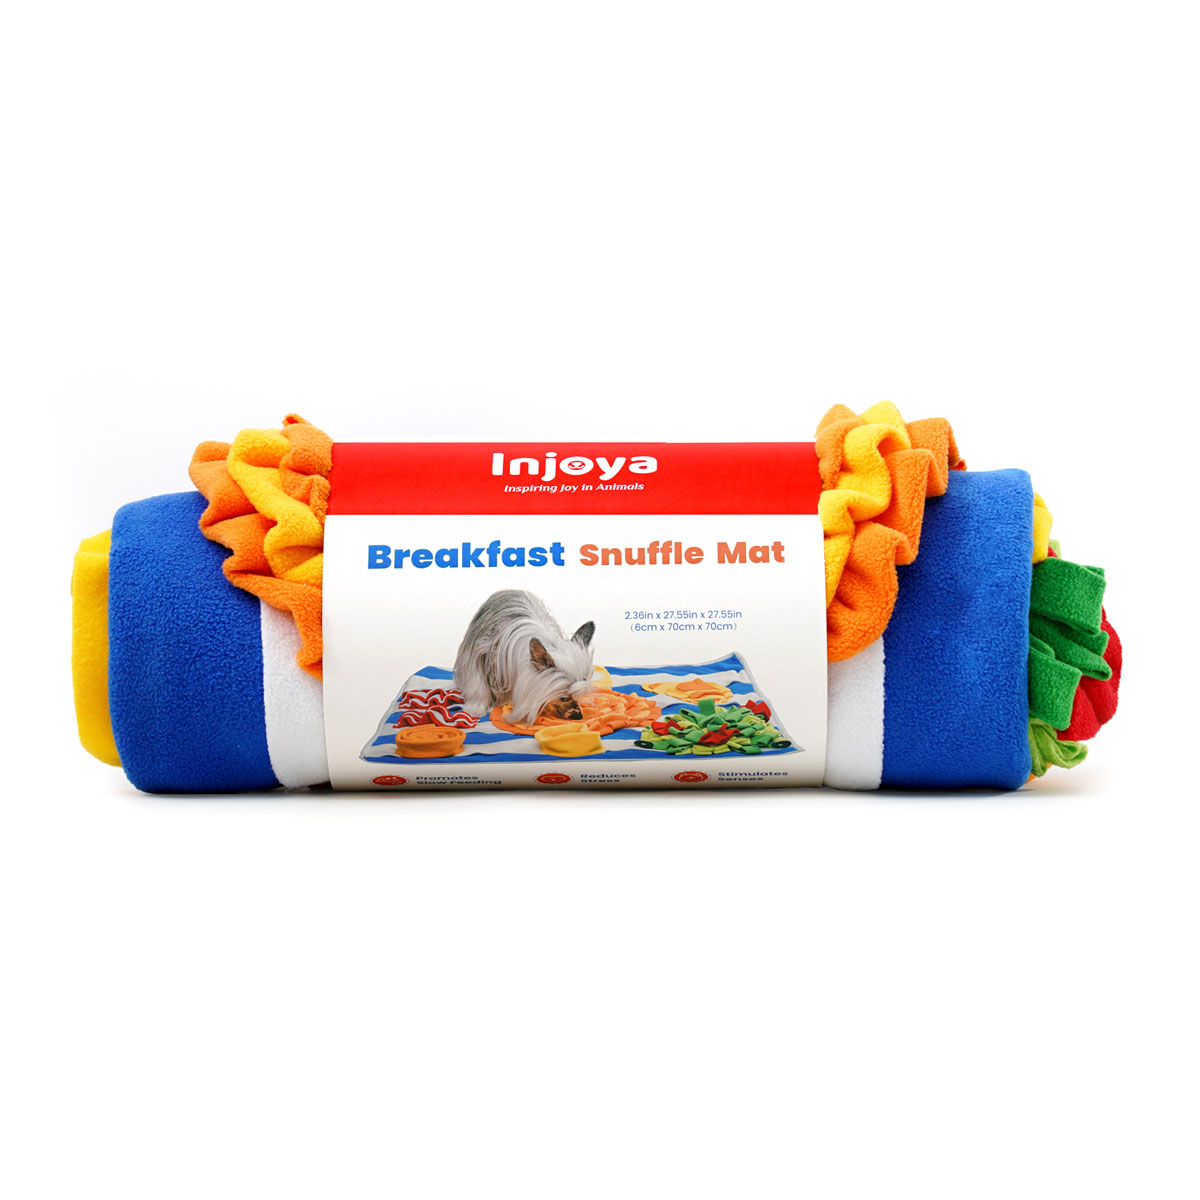 https://halaspaws.com/wp-content/uploads/2023/06/Injoya-Breakfast-Snuffle-Mat-packaging.jpg